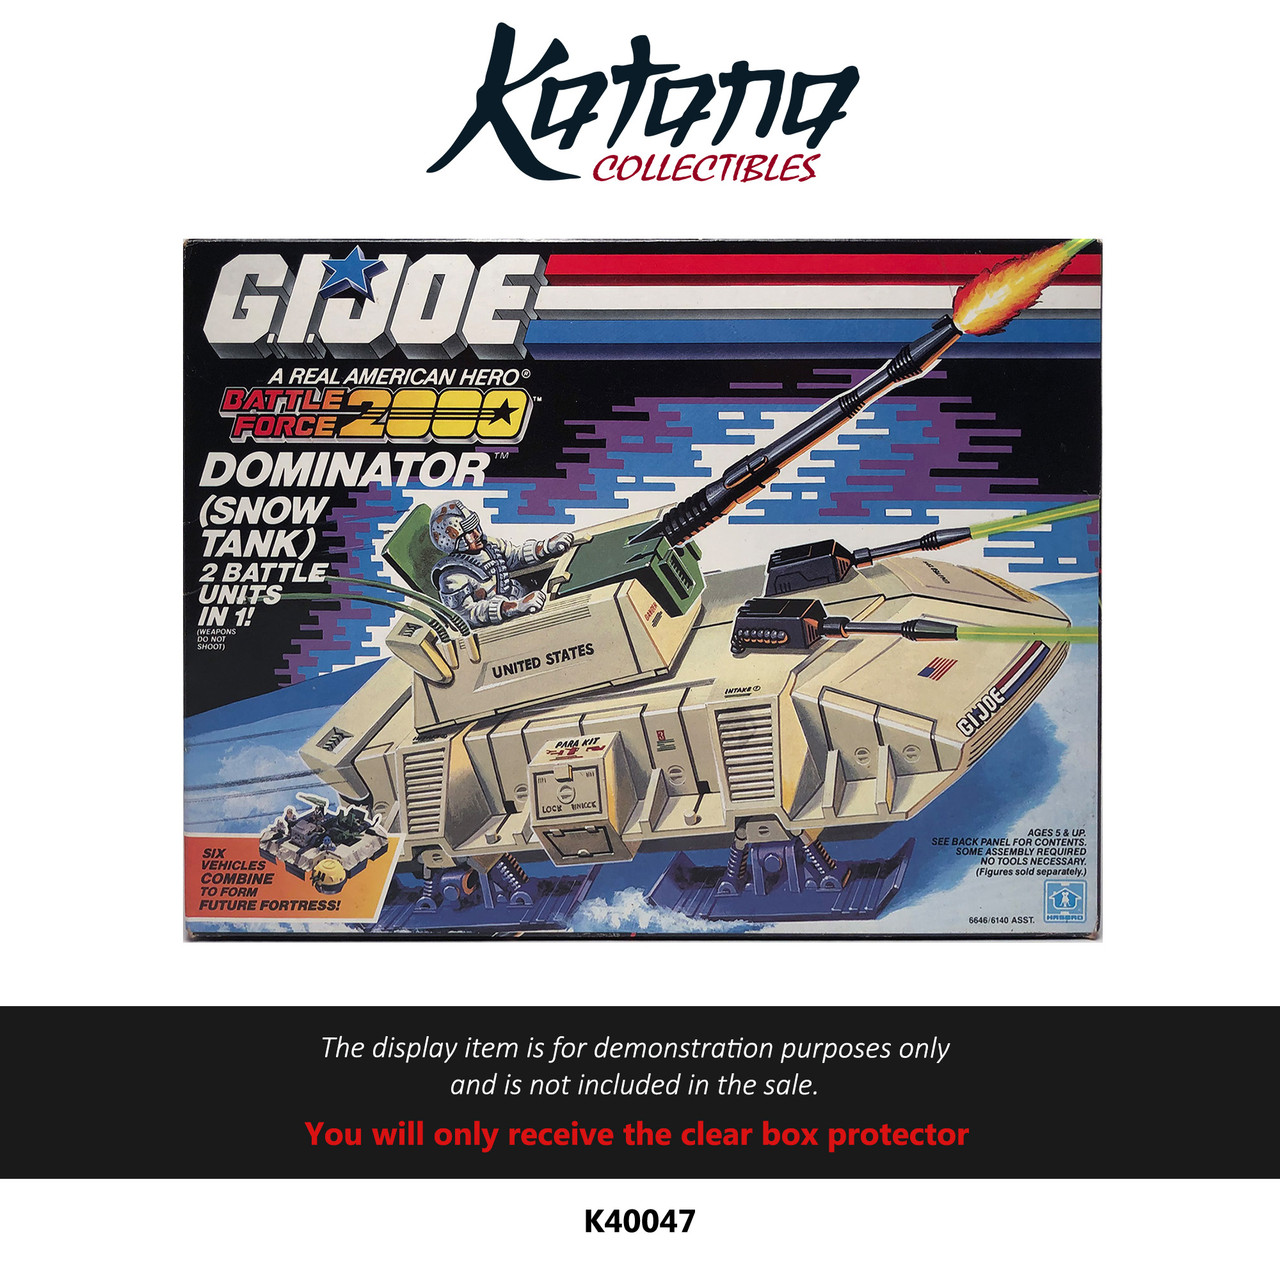 Katana Collectibles Protector For 1987 G.I. Joe Battle Force 2000 Dominator